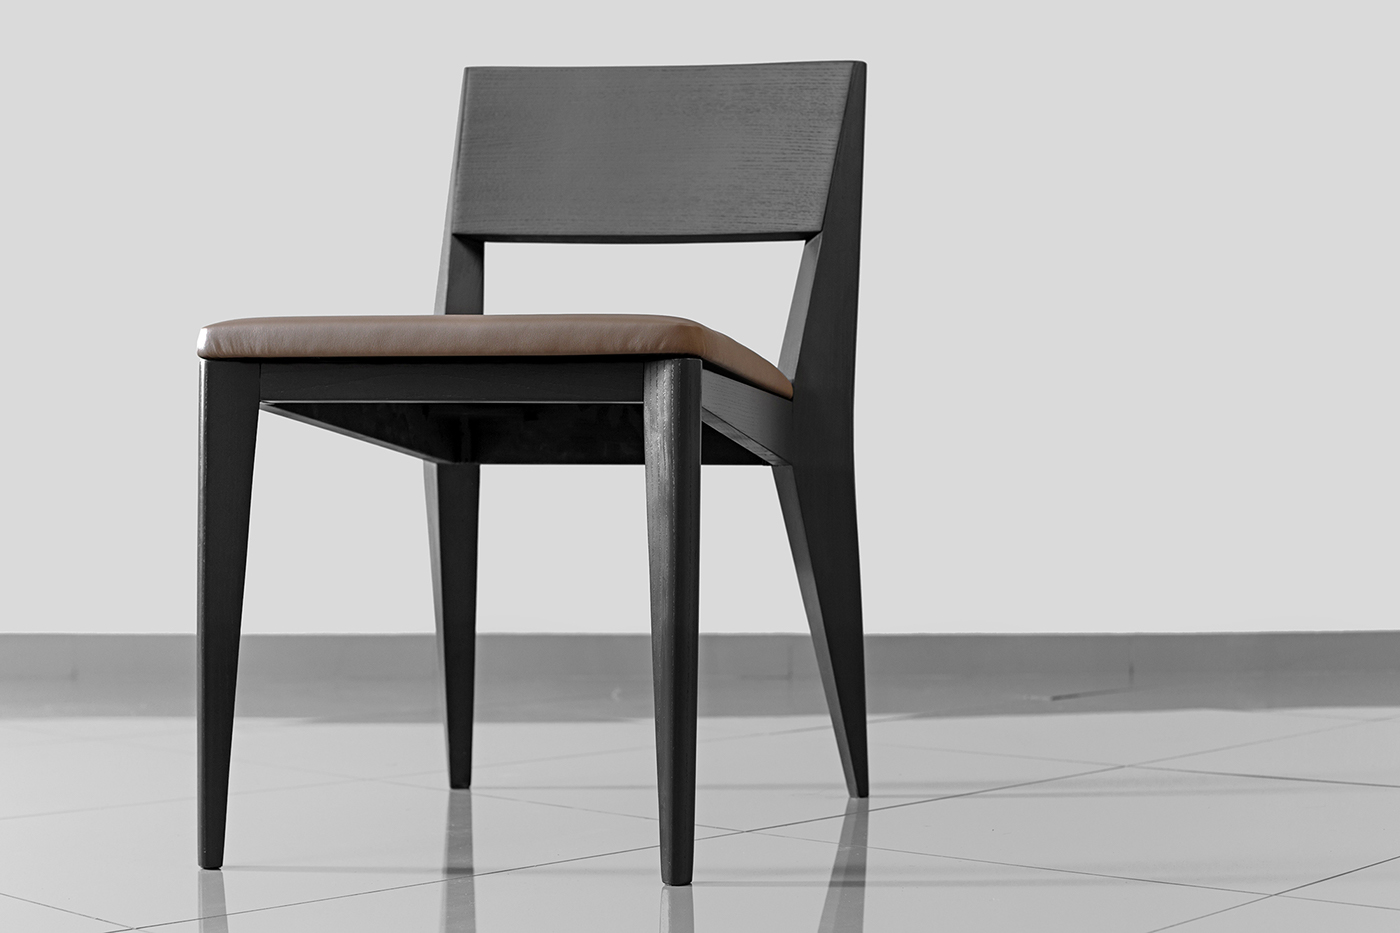 indress OLLLY Pavelvetrov design chair armchair Production furniture Dborisov